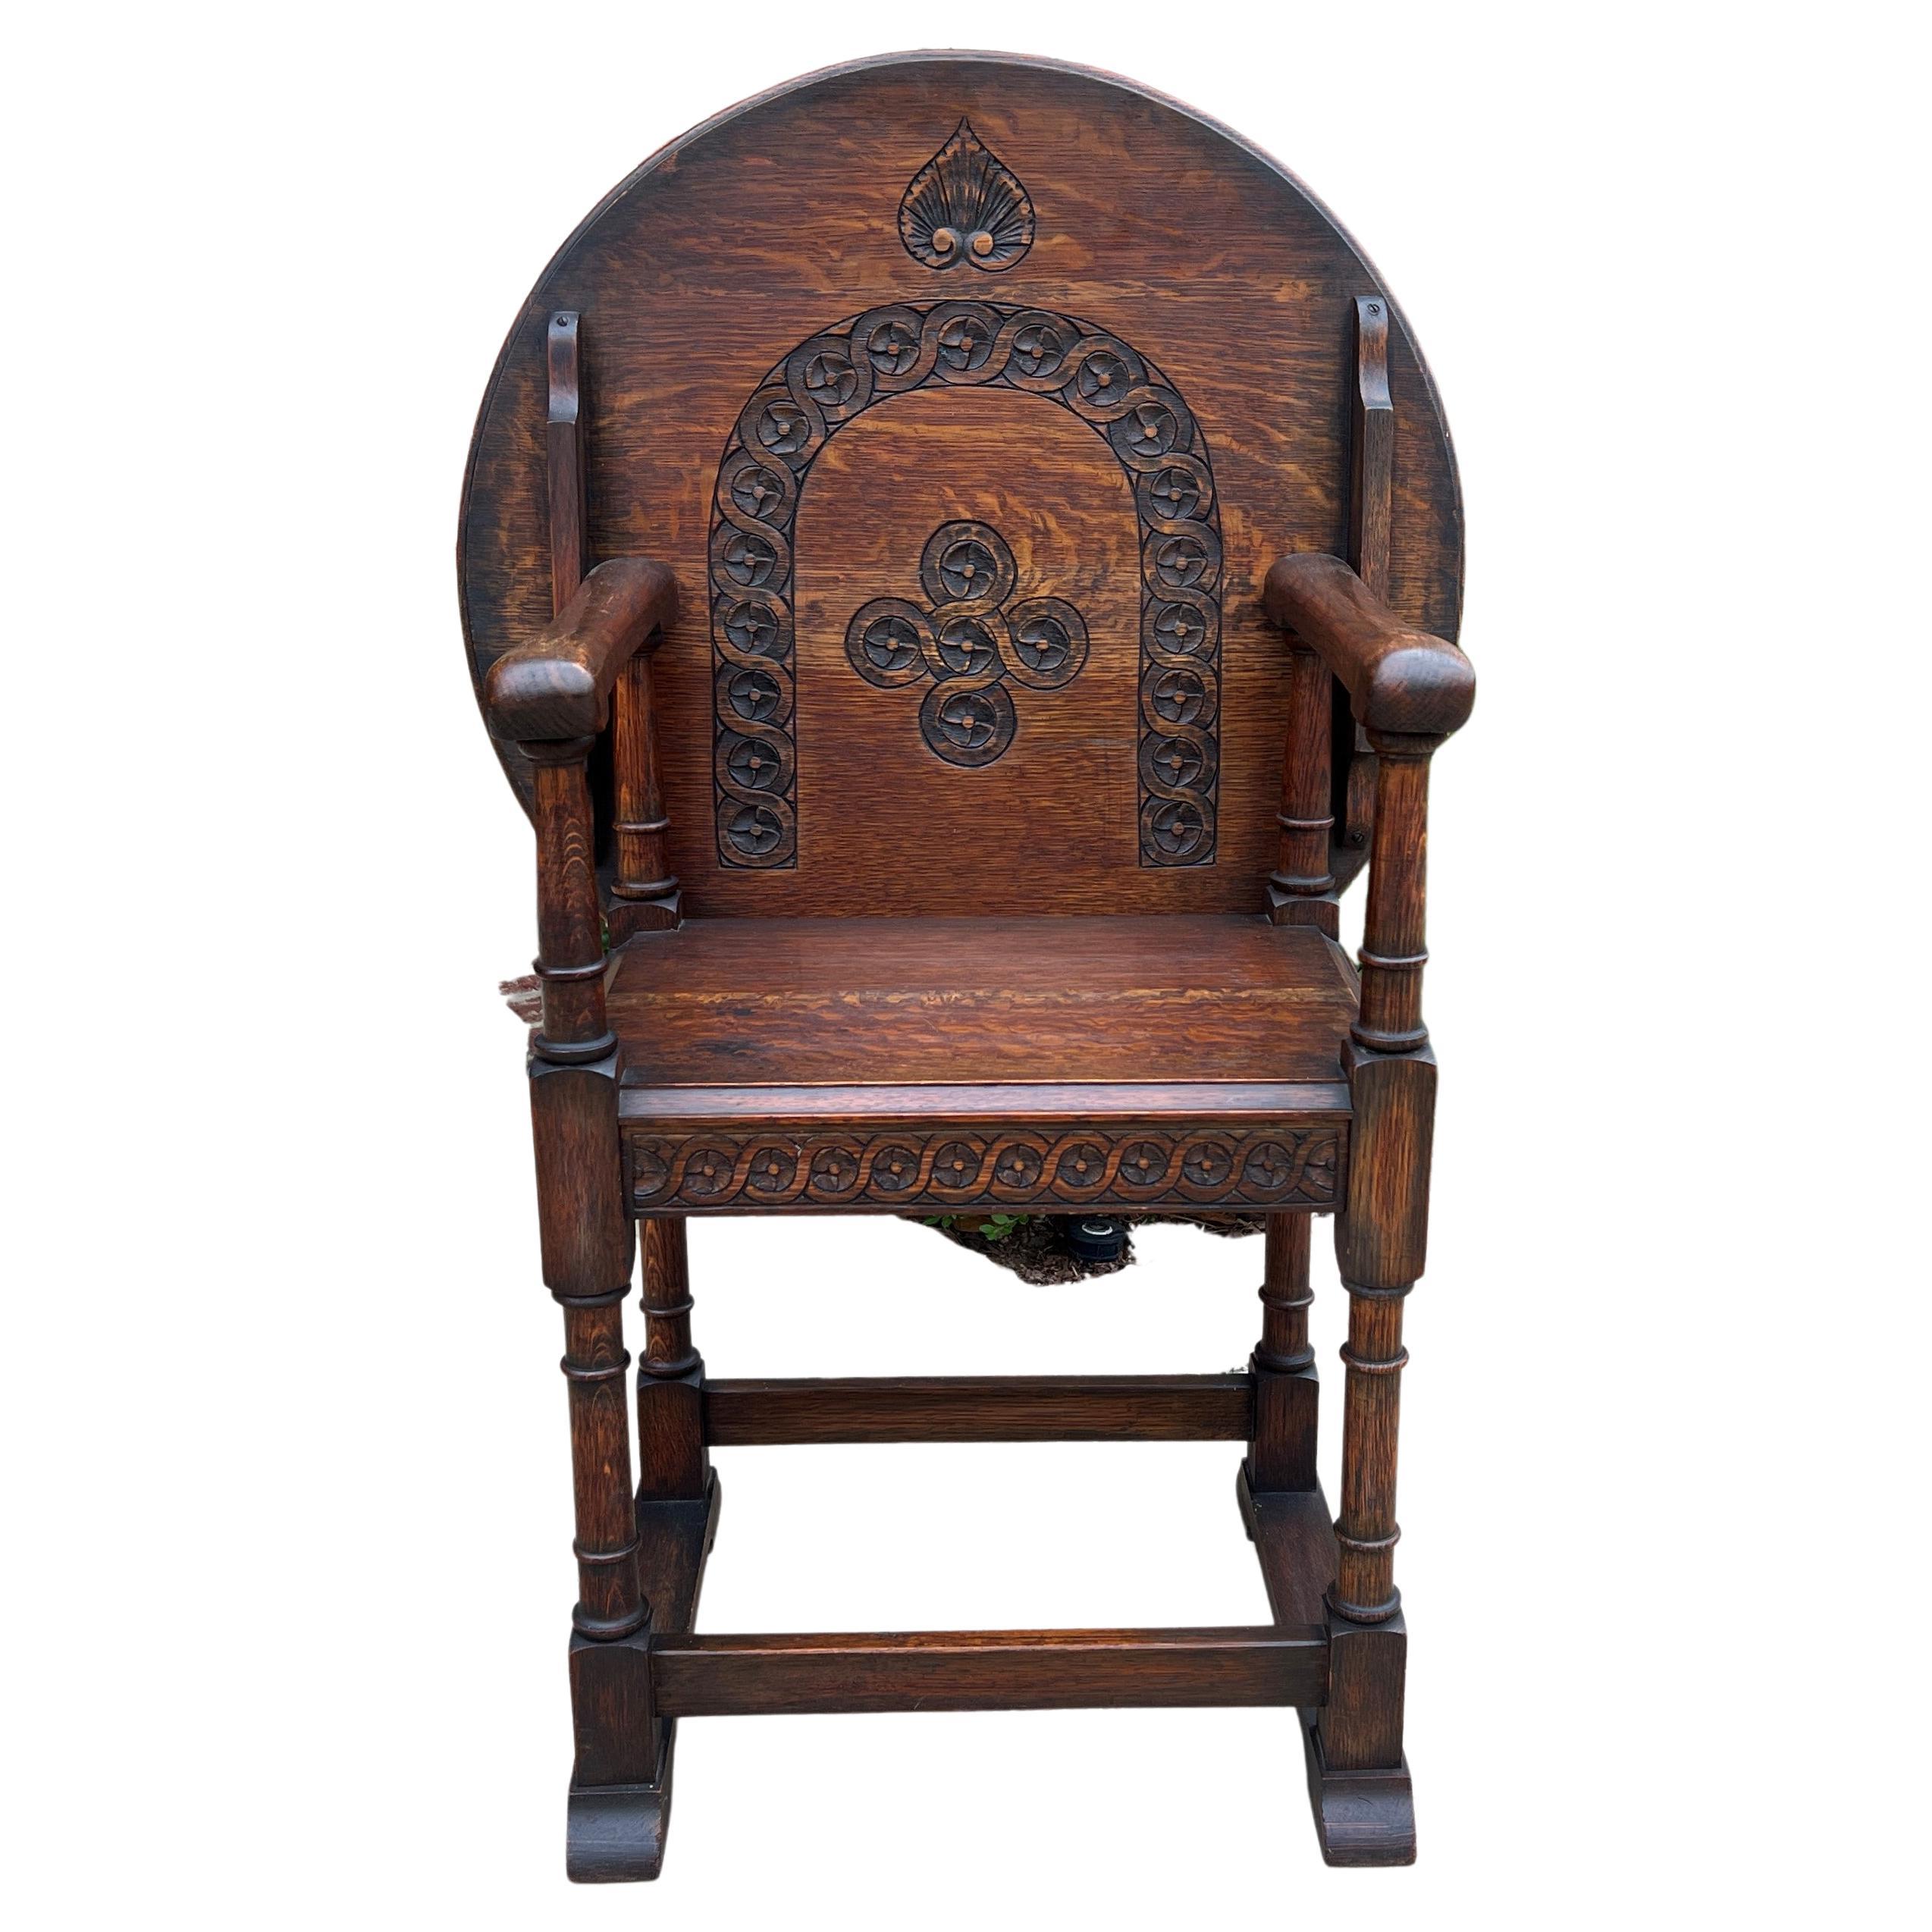 Fauteuil de chaise de moine anglais ancien en chêne converti en table pliante ROUND 19th C